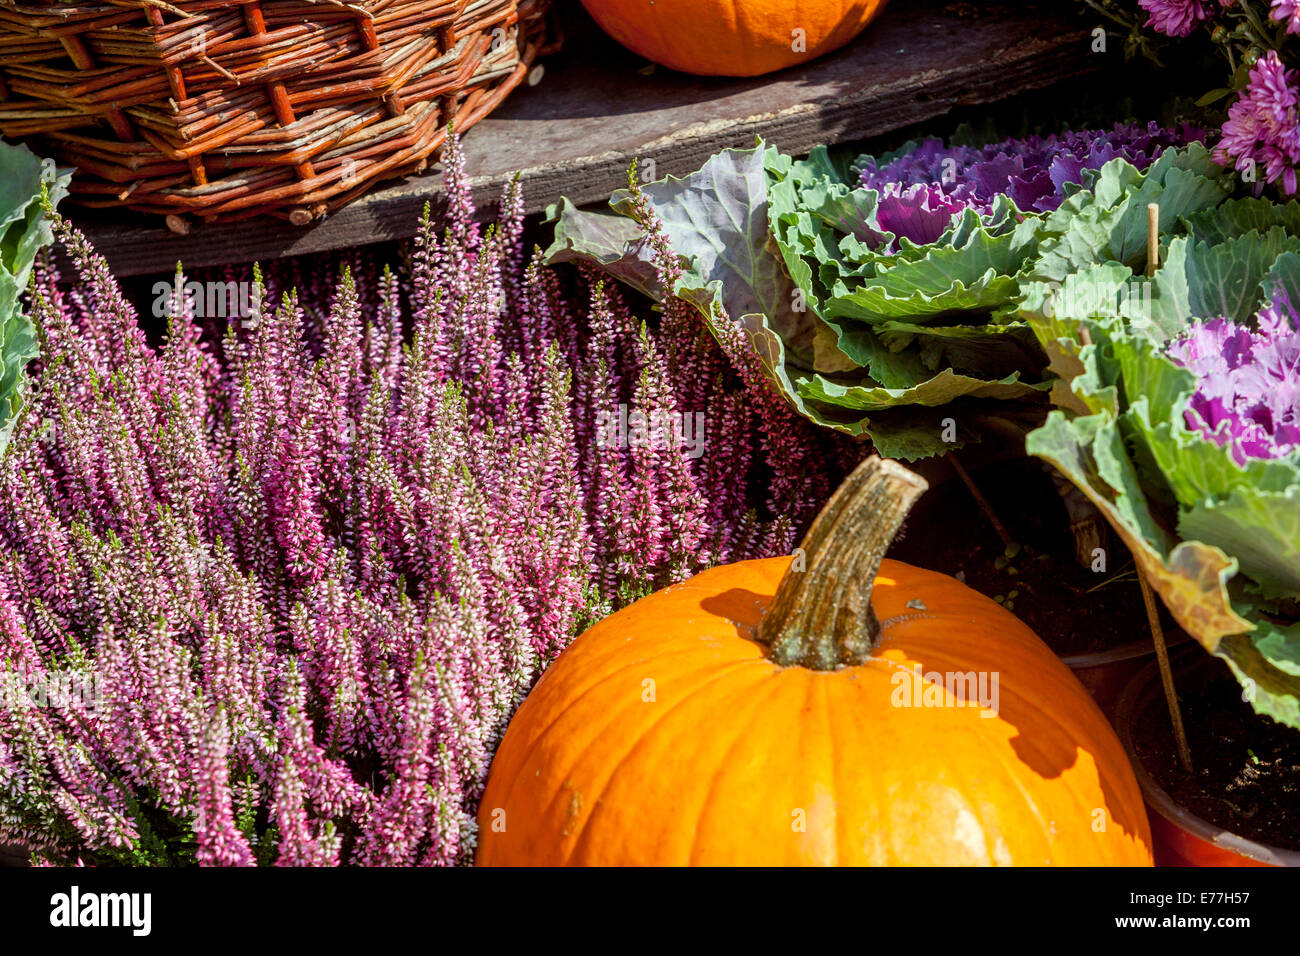 Pumpkins, squash, plants, Decorative display Stock Photo